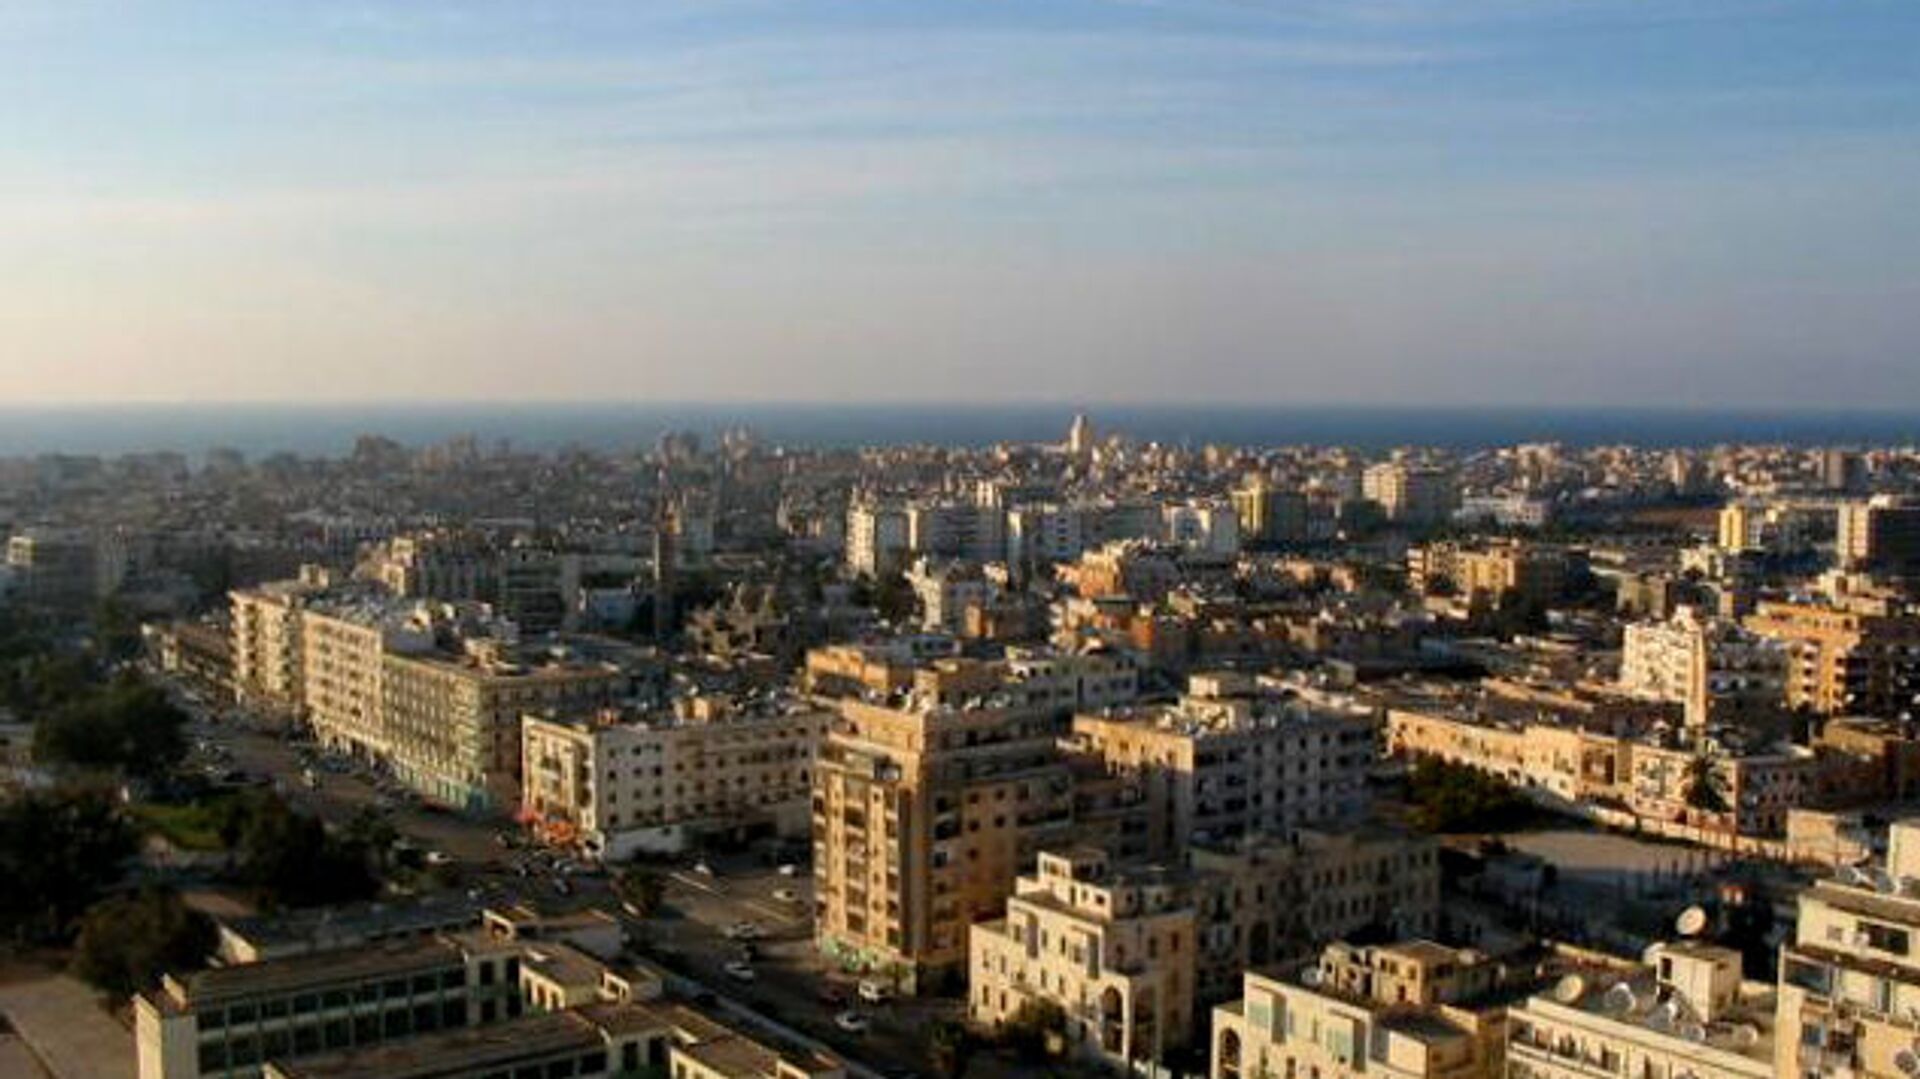 A view of the Old Town of Benghazi, Libya - Sputnik International, 1920, 22.11.2021